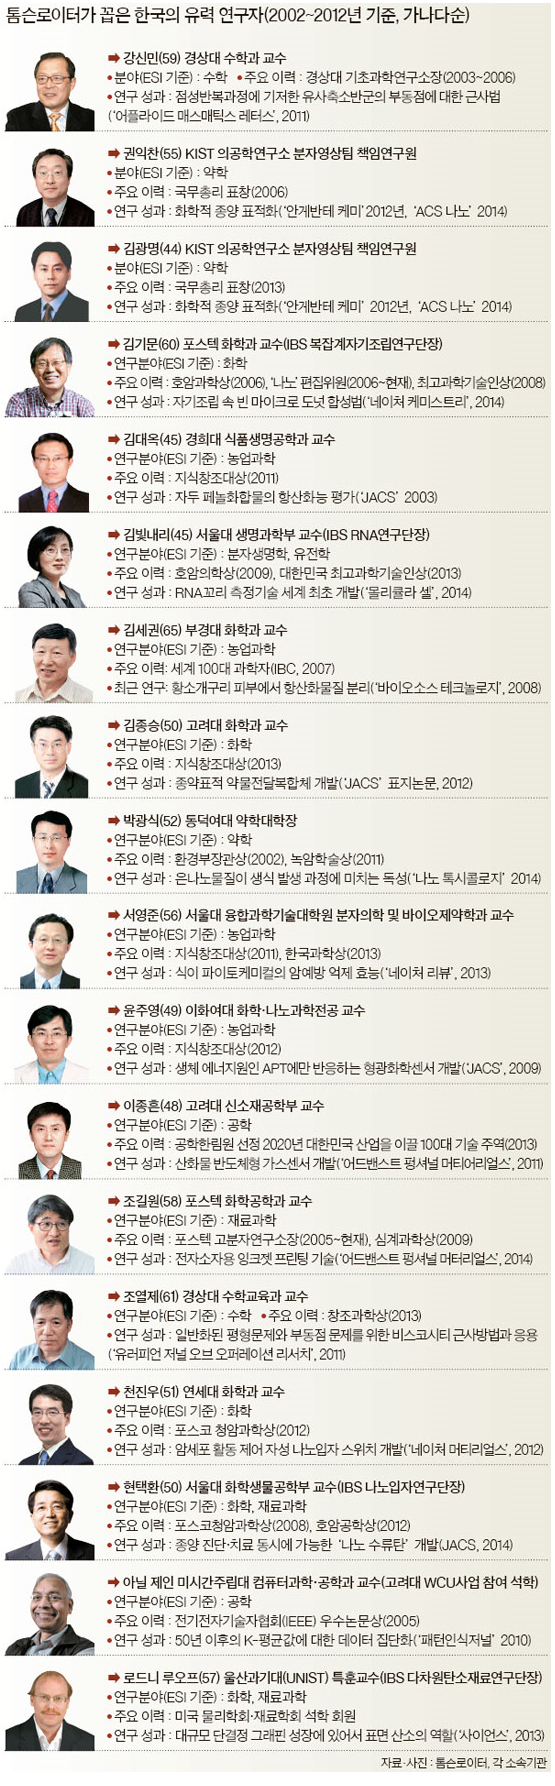 [Korean Media] Thomson Reuters / Expected Nobelist in Korea